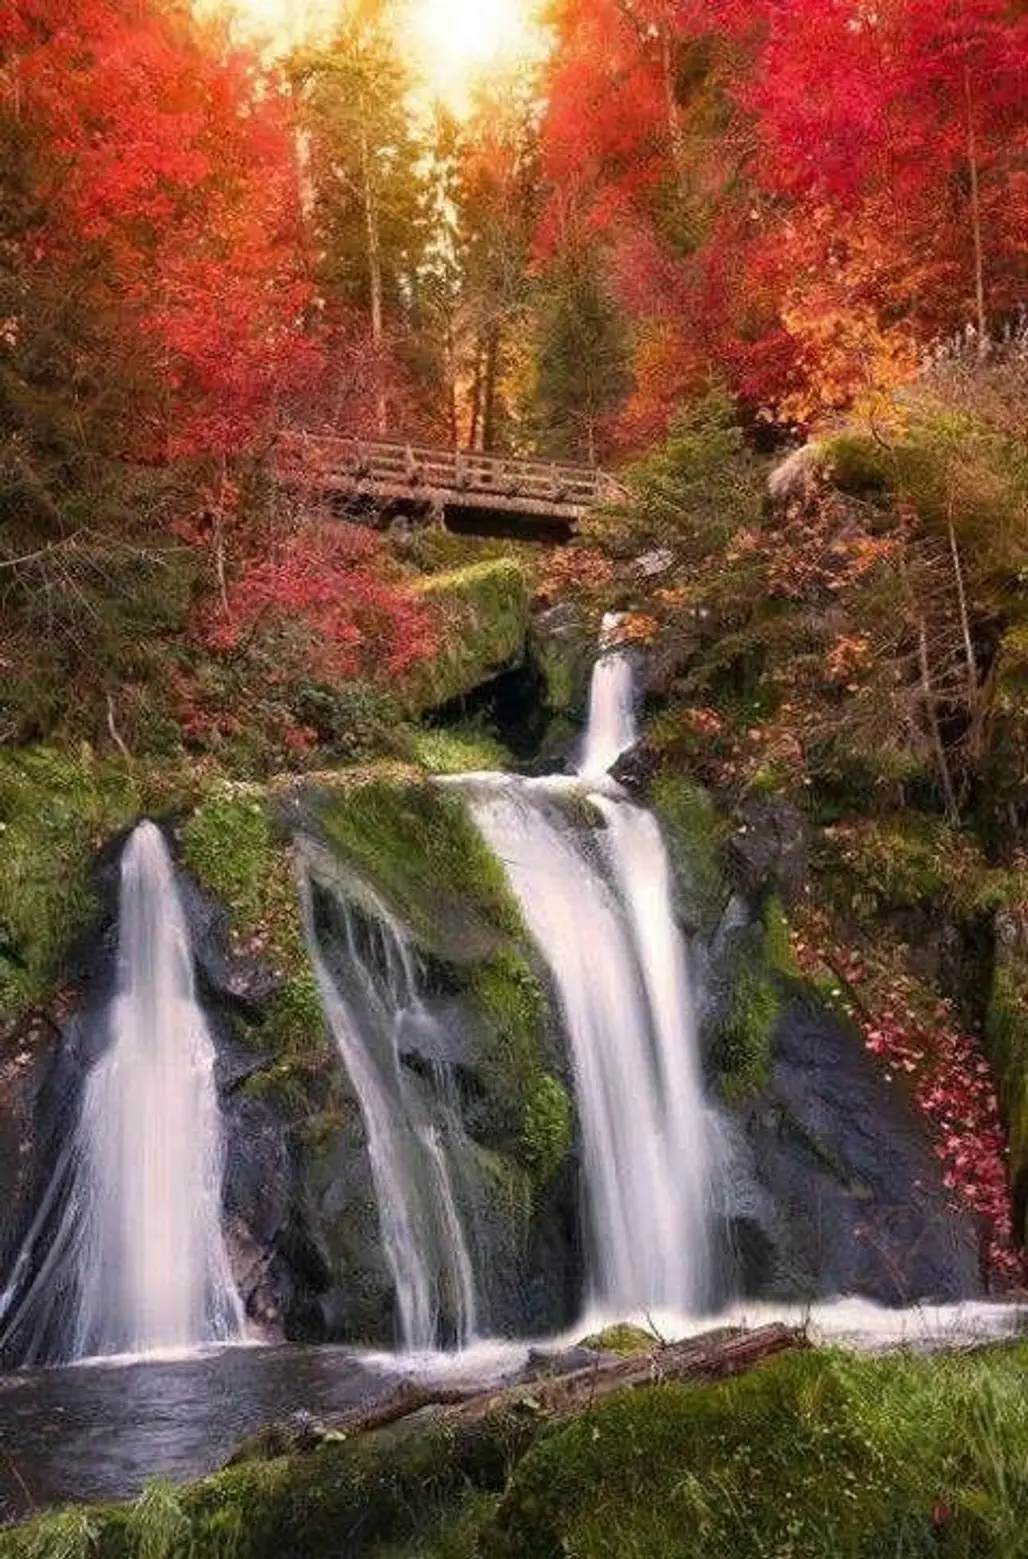 Triberg Falls, Germany